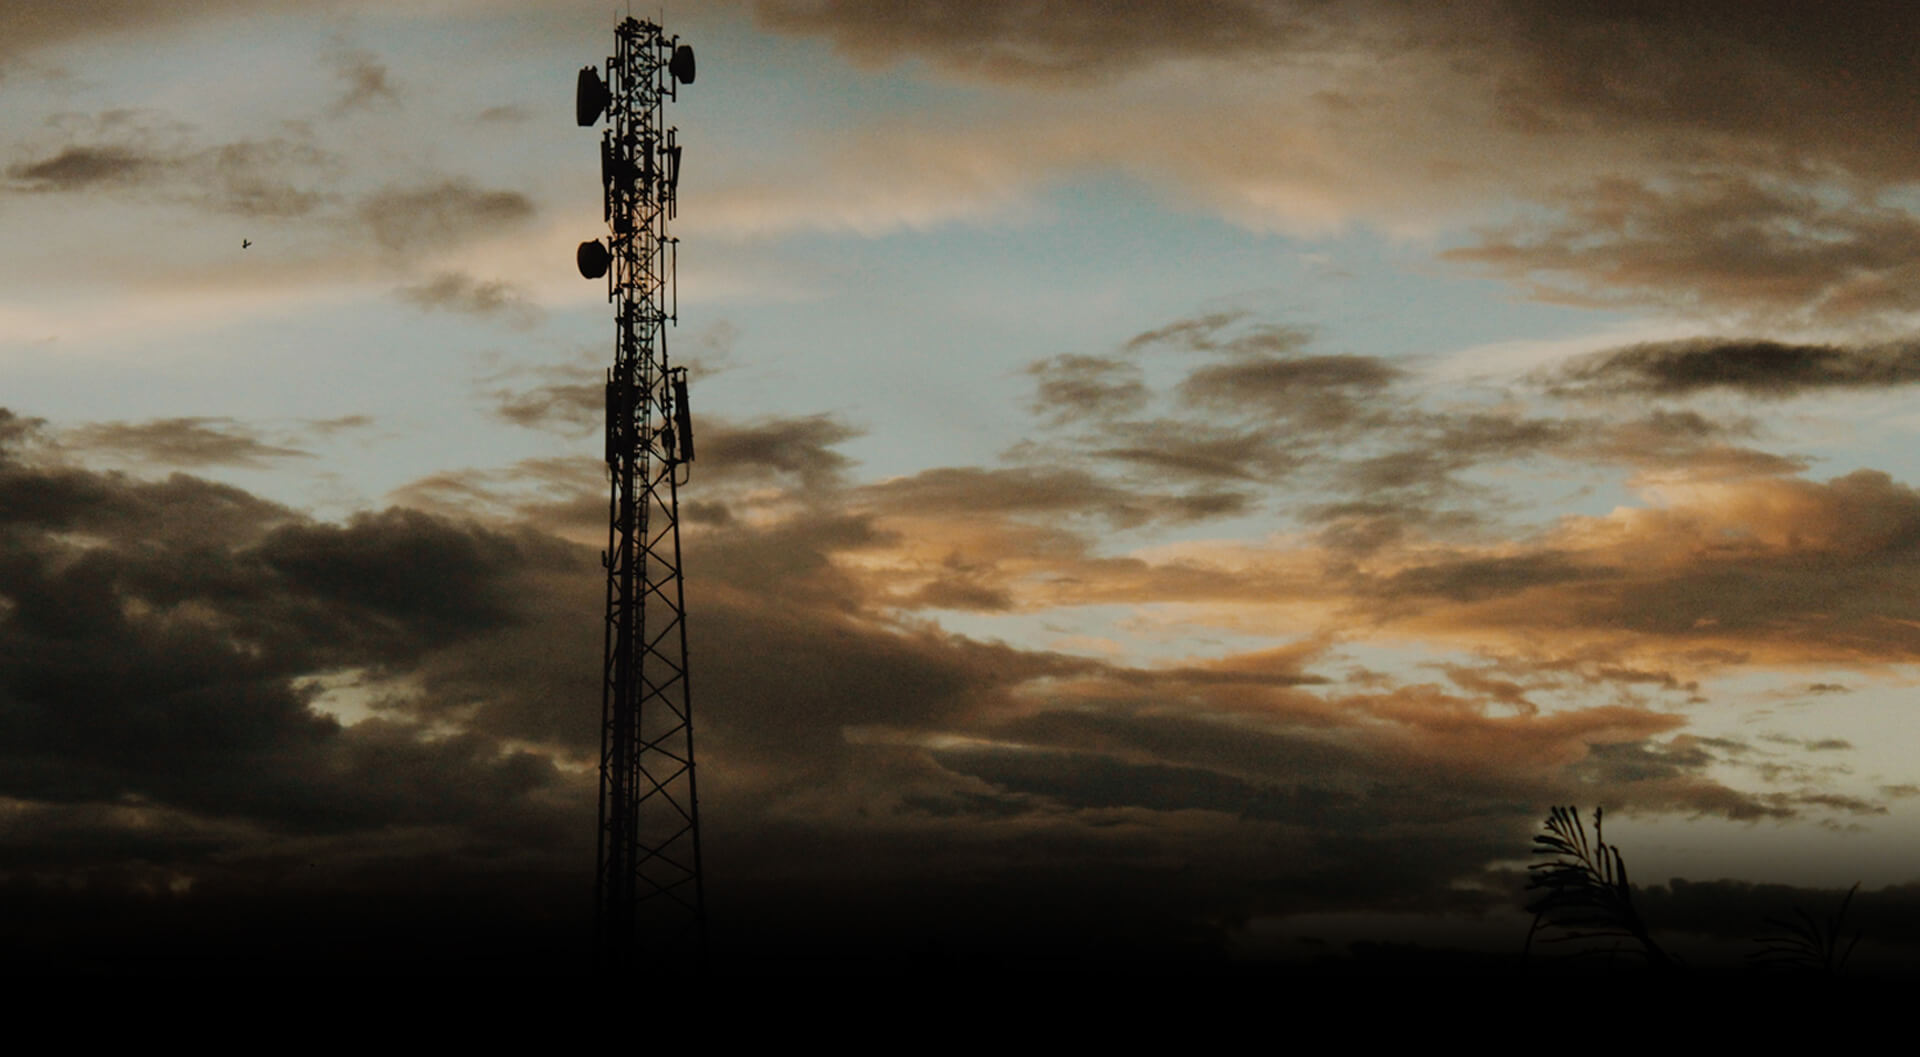 Communication mast at sunset